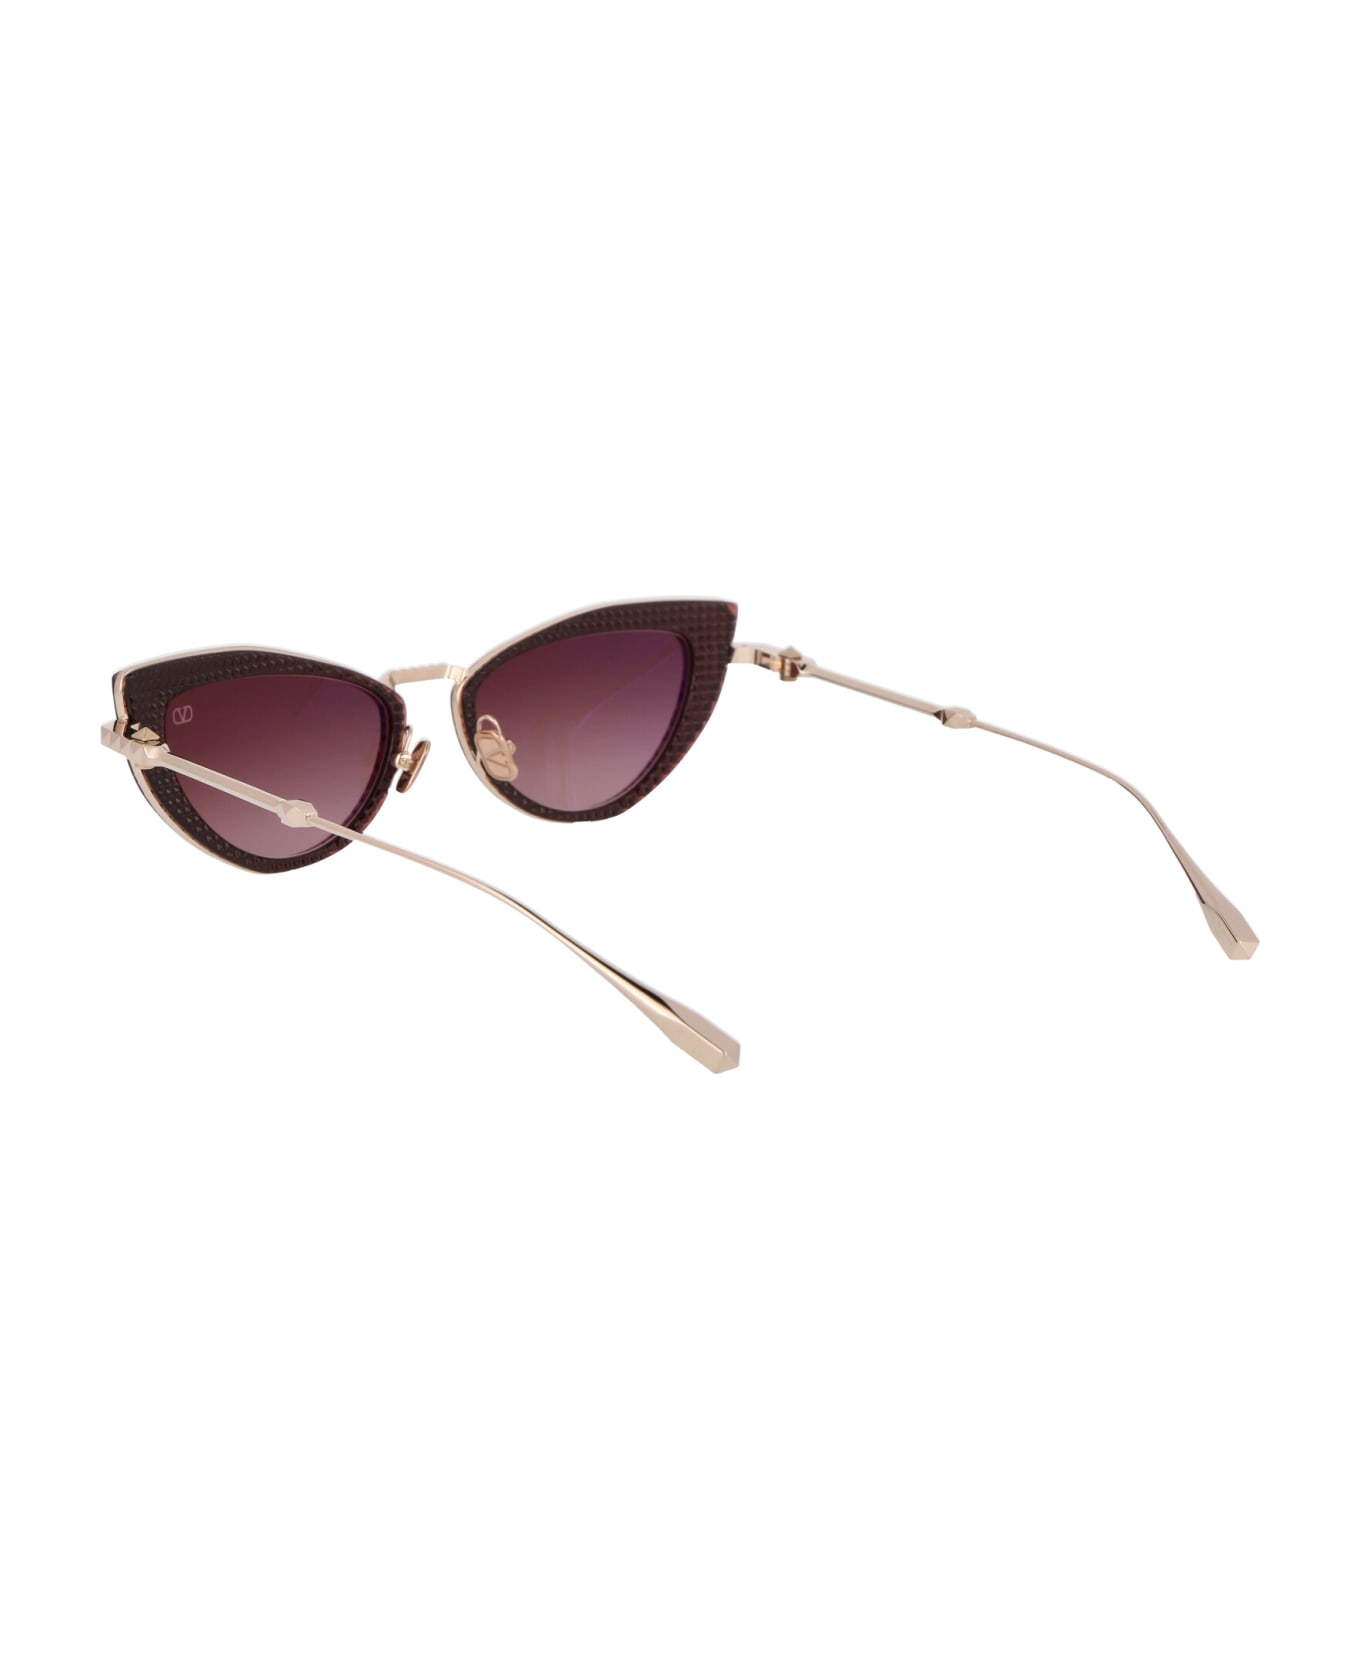 Valentino Eyewear Viii Sunglasses - WHITE GOLD CRYSTAL BORDEAUX W/ DARK ROSE TO LIGHT ROSE GRADIENT